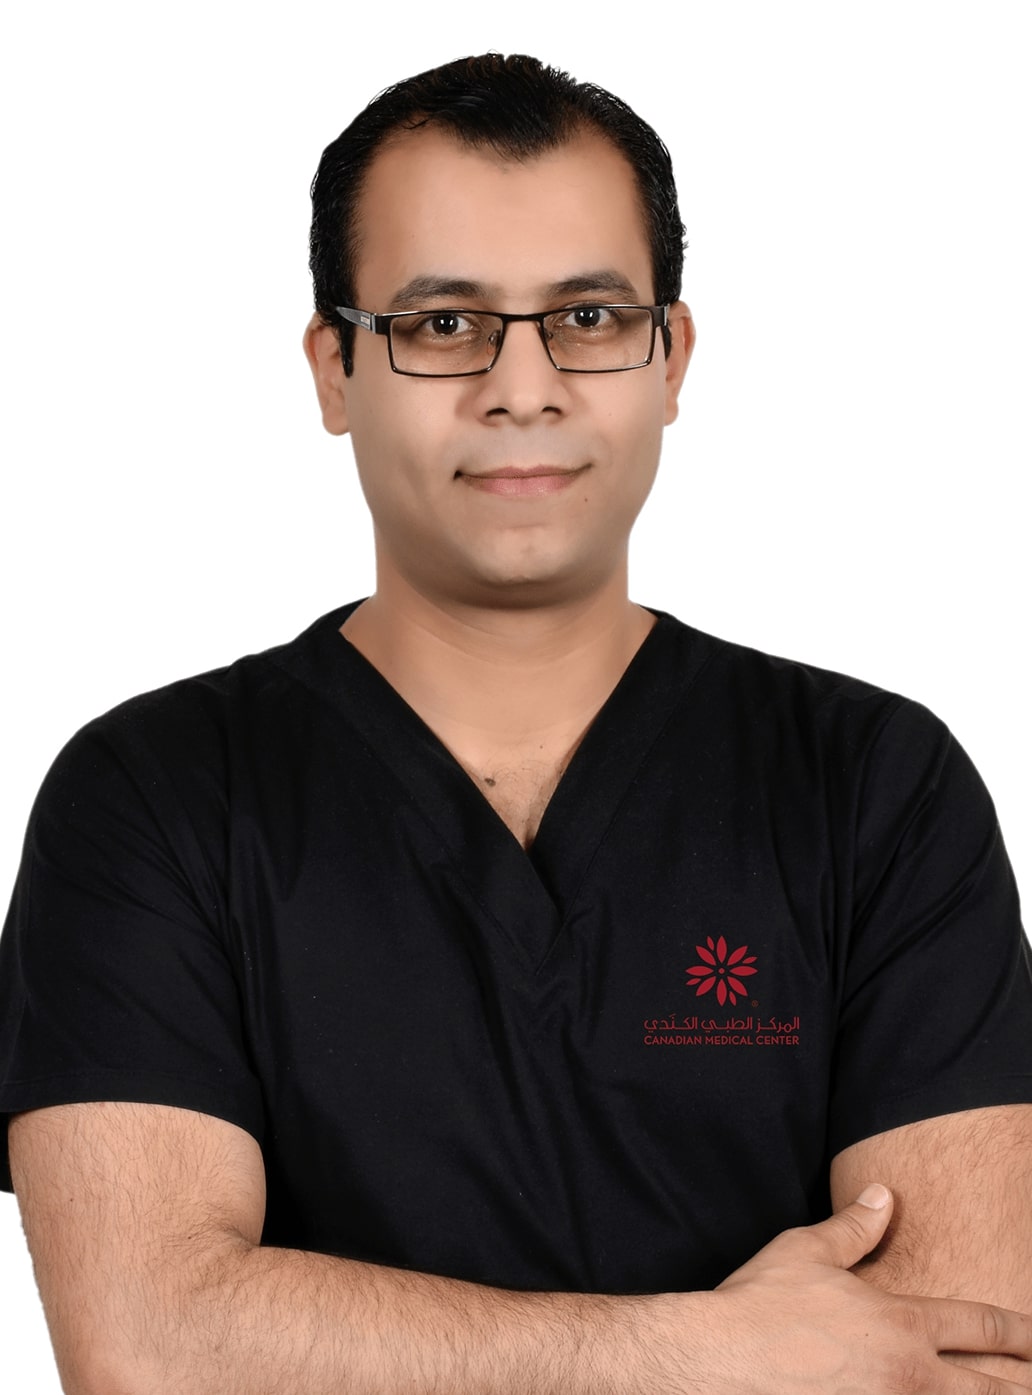 Dr. Khalid Hussain